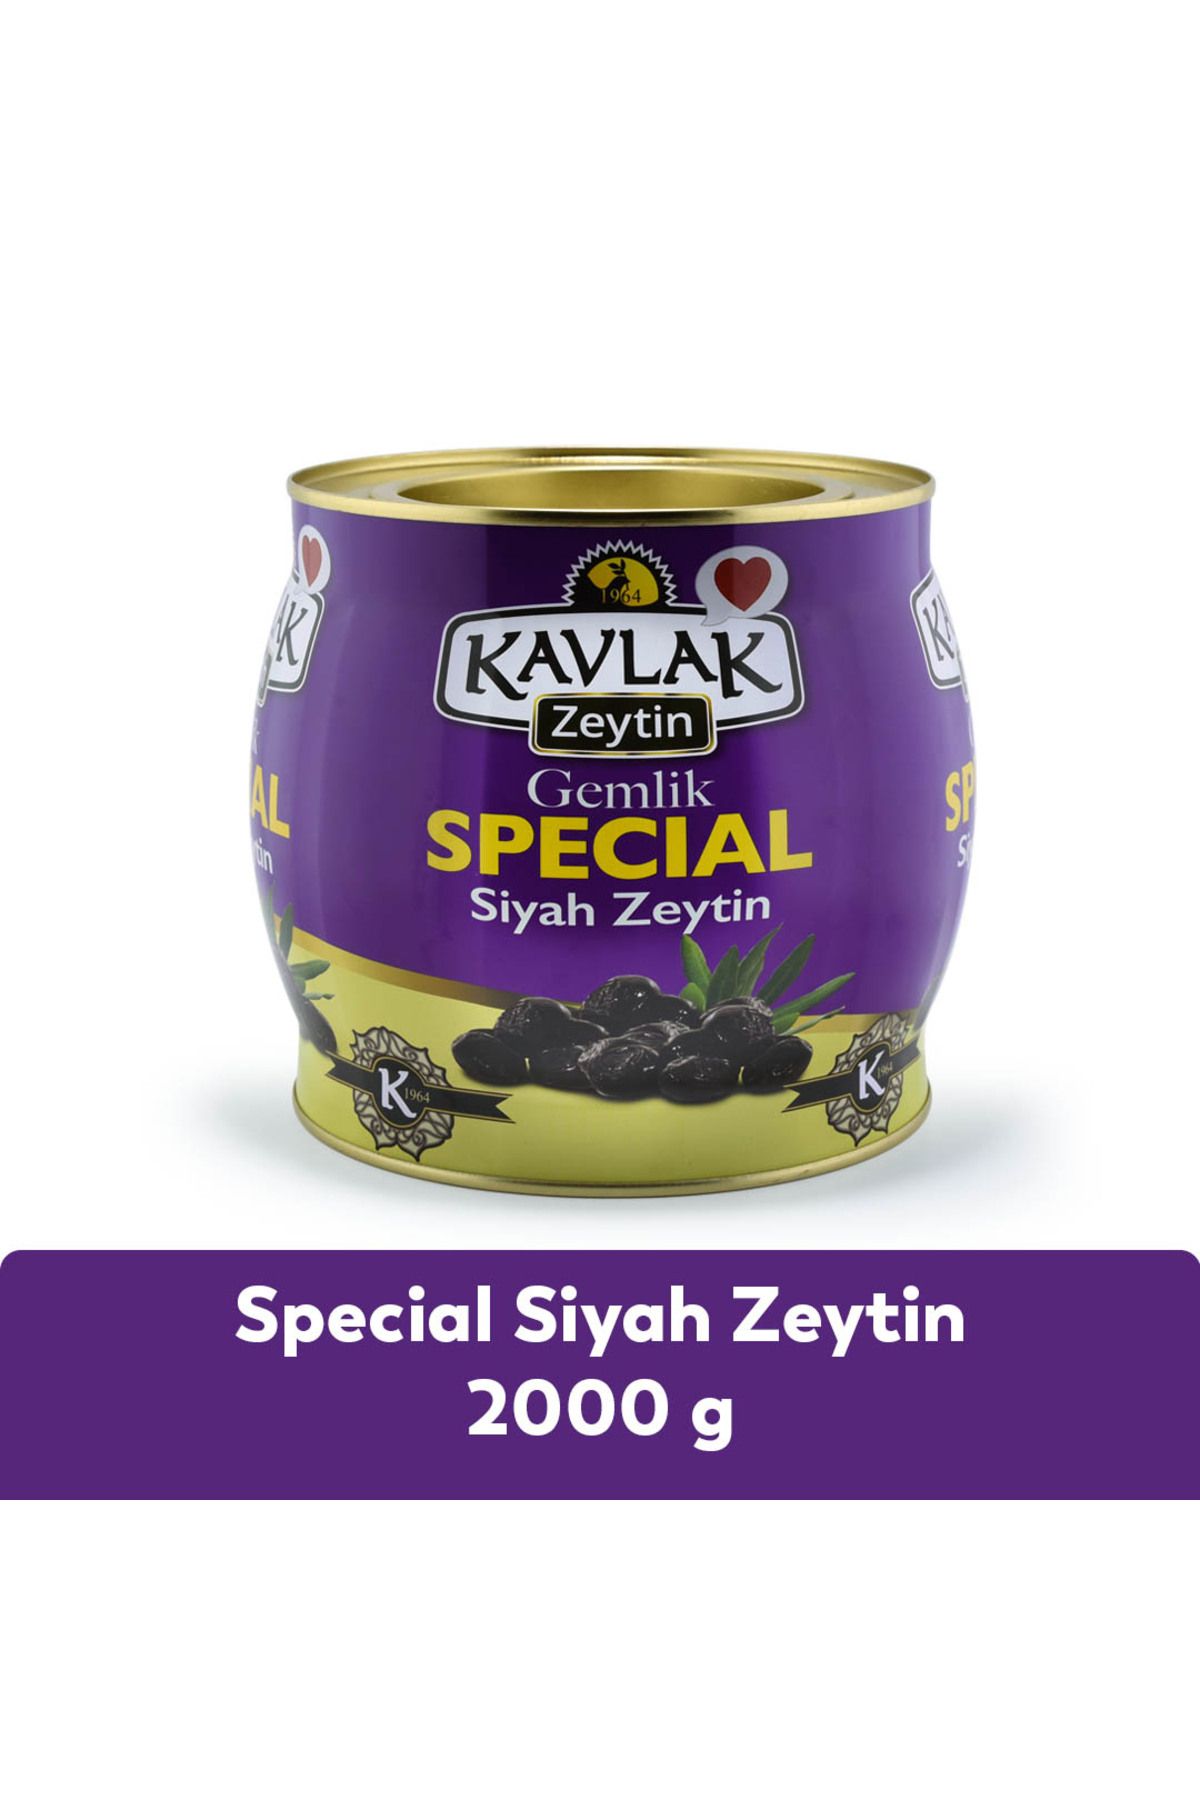 Kavlak Zeytin Special Gemlik Siyah Zeytin 2 kg